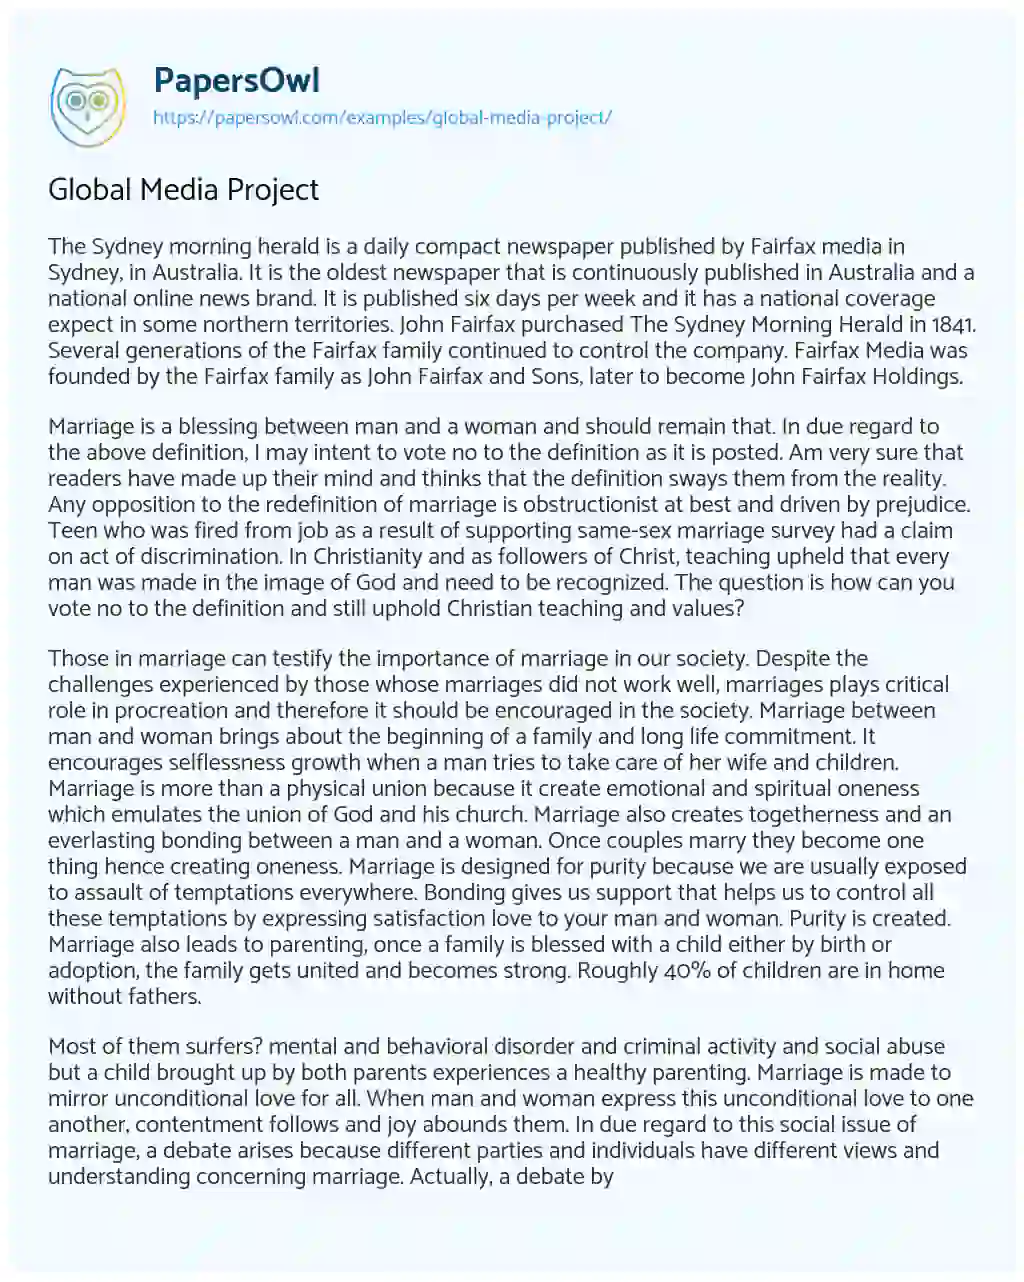 Global Media Project essay